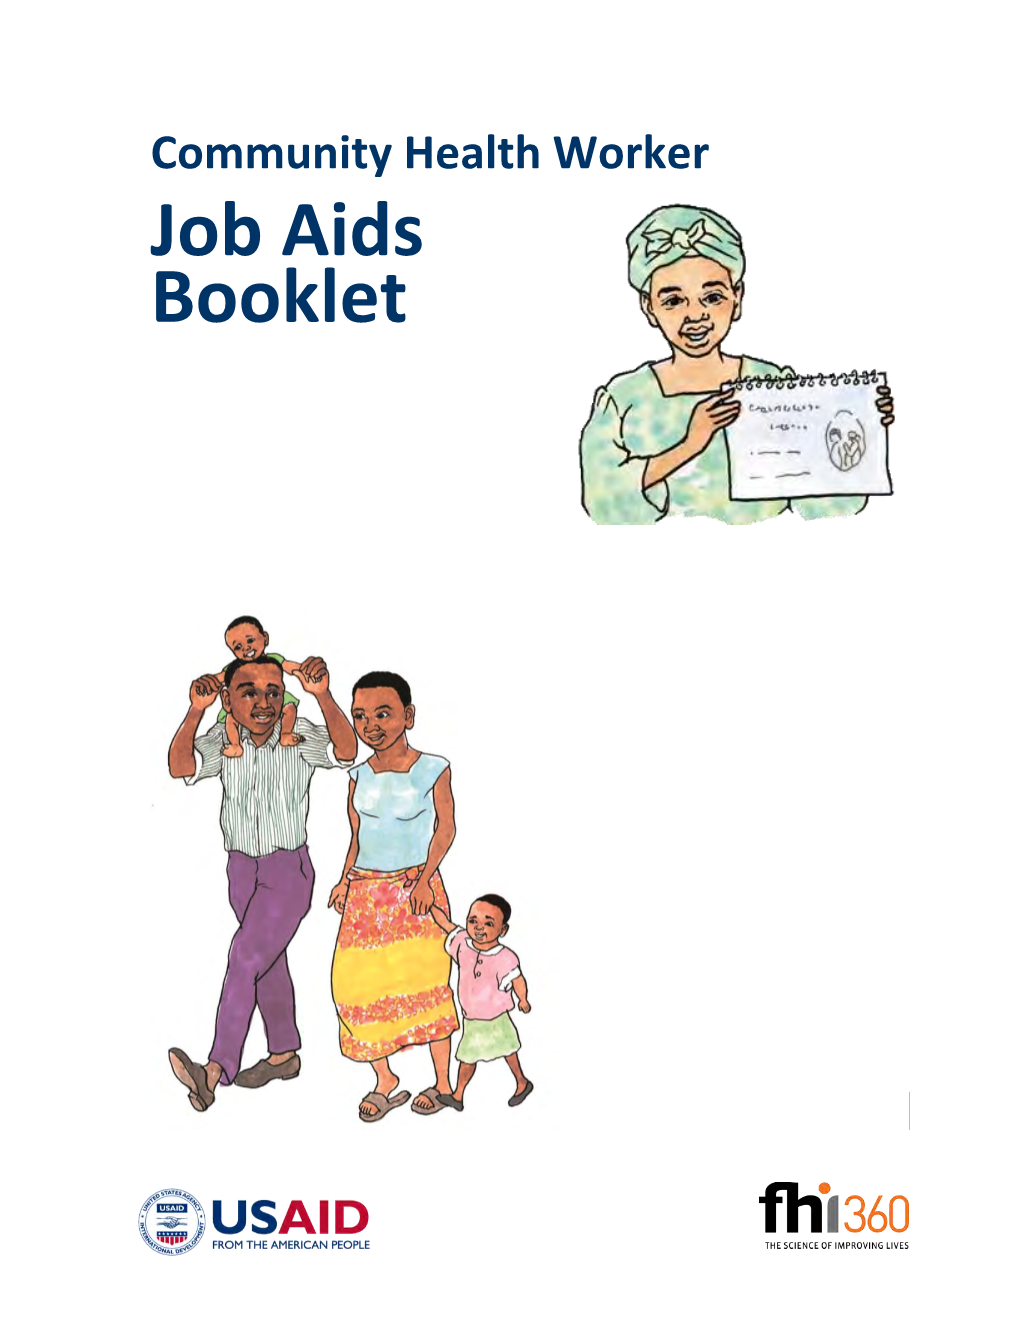 Job Aids Booklet